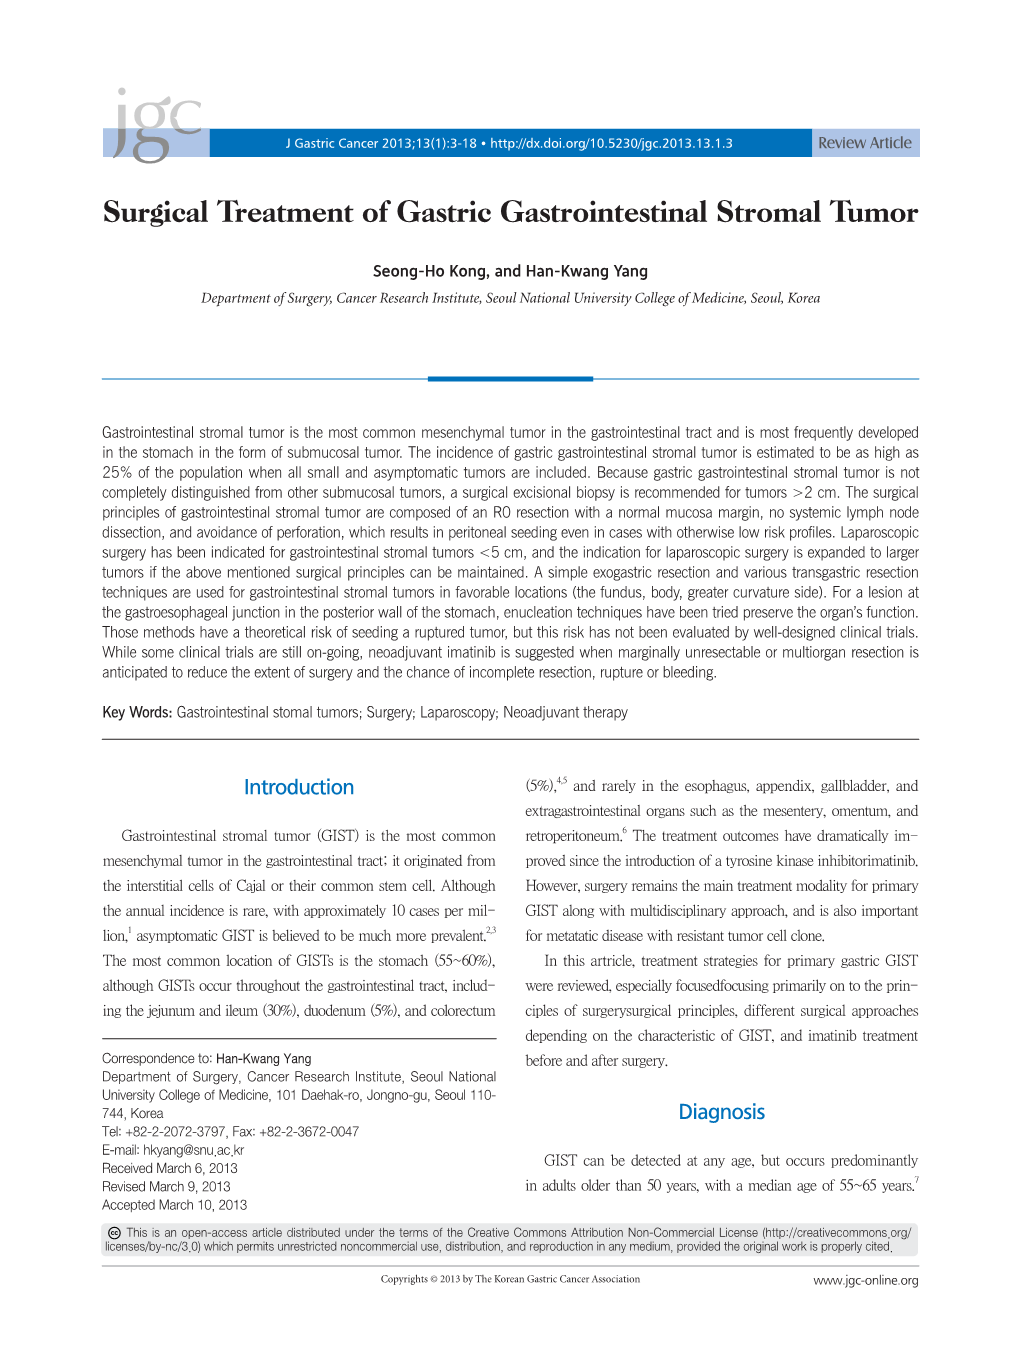 Surgical Treatment of Gastric Gastrointestinal Stromal Tumor